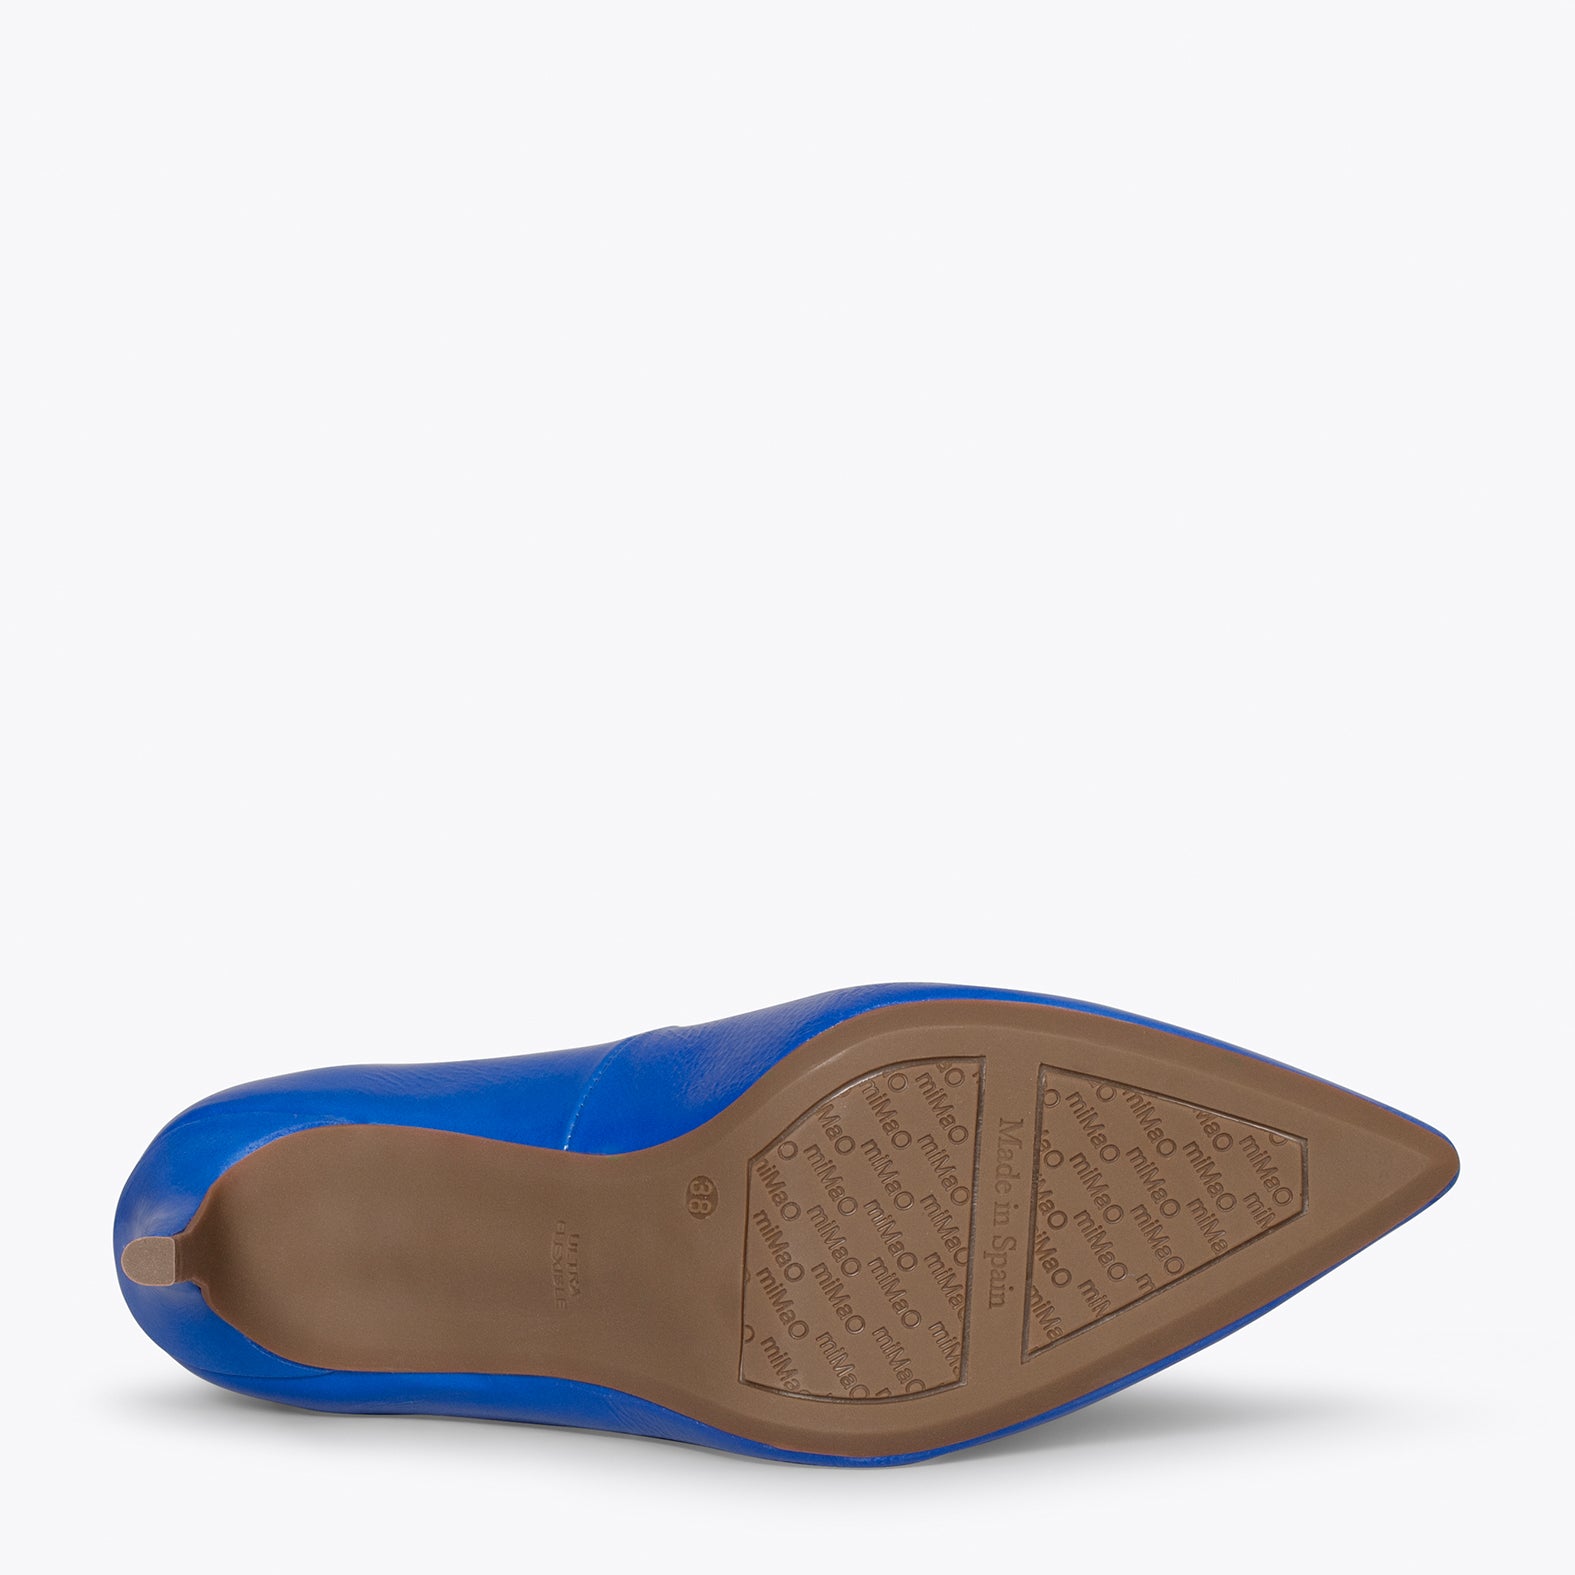 STILETTO PATENT – ELECTRIC BLUE patent leather stiletto heel